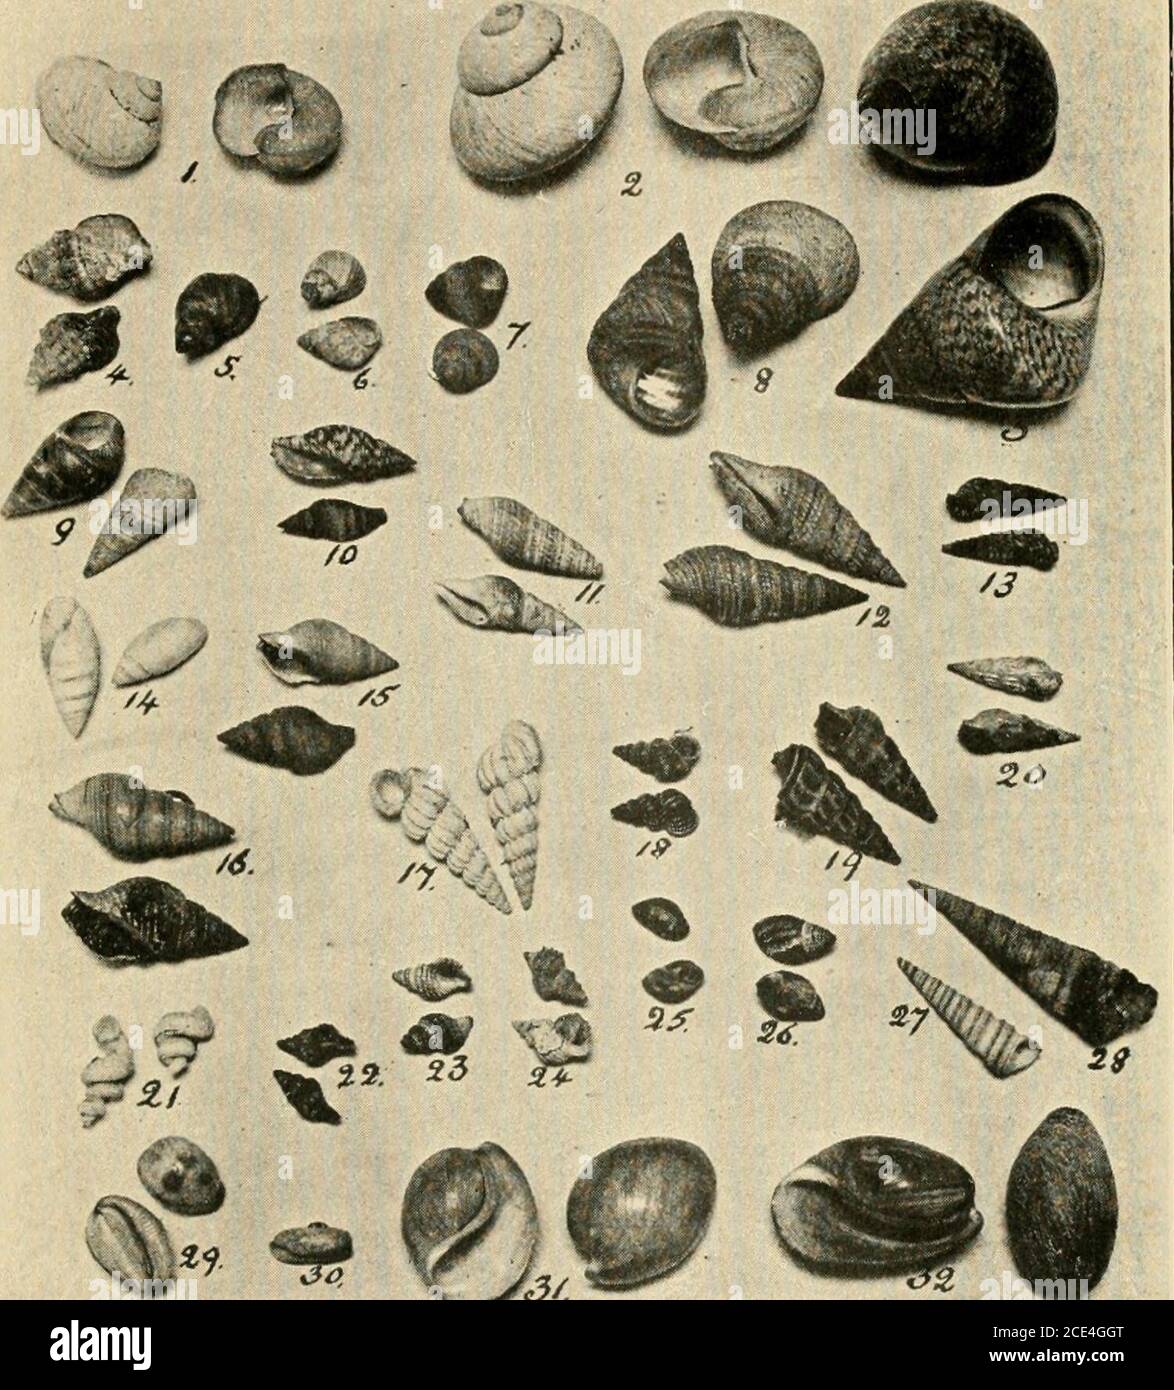 . Beautiful shells of New Zealand : an illustrated work for amateur collectors of New Zealand marine shells, with directions for collecting and cleaning them . 1—Calliostoma tigris2—Calliostoma selectuni3—Calliostoma pellucidum4—Calliostoma punctulatum5—Trochus viridis ...6—Trochus tiaratus7—Ethalia zelandica8—Natica zelandica...9—Nerita nigra Page 232424242424252525 Page 10—Ami)hil)&lt;)la crenata 26 11—Moiiocloiita subrostrata ... 26 12—Miinodouta aethiops 26 13—Monodoiita nigerrima .. 26 14—Monodonta lugubris 26 15—Turbo granosus 26 16 and 17—Turbo helicinus ... 27 18—Astralium sulcatum 27 Stock Photo